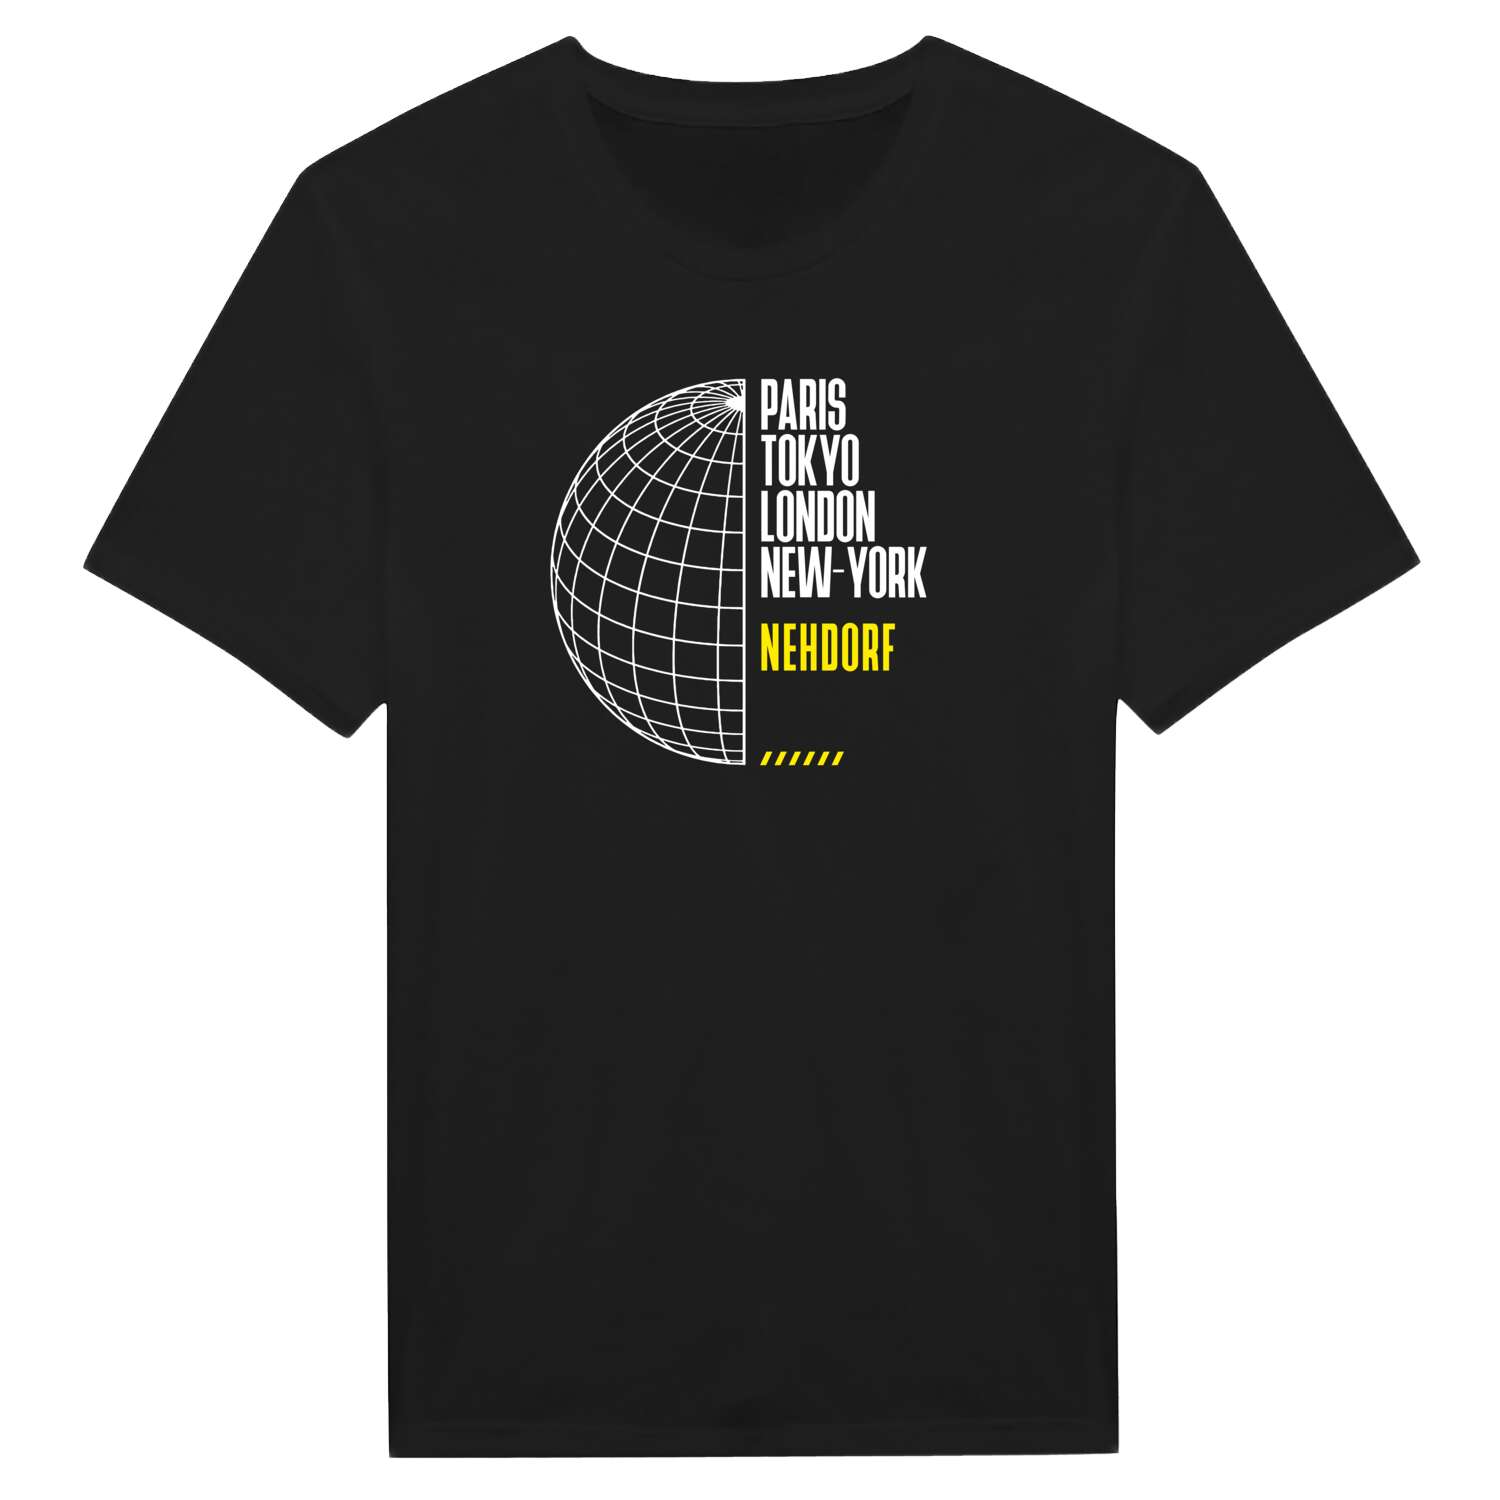 Nehdorf T-Shirt »Paris Tokyo London«